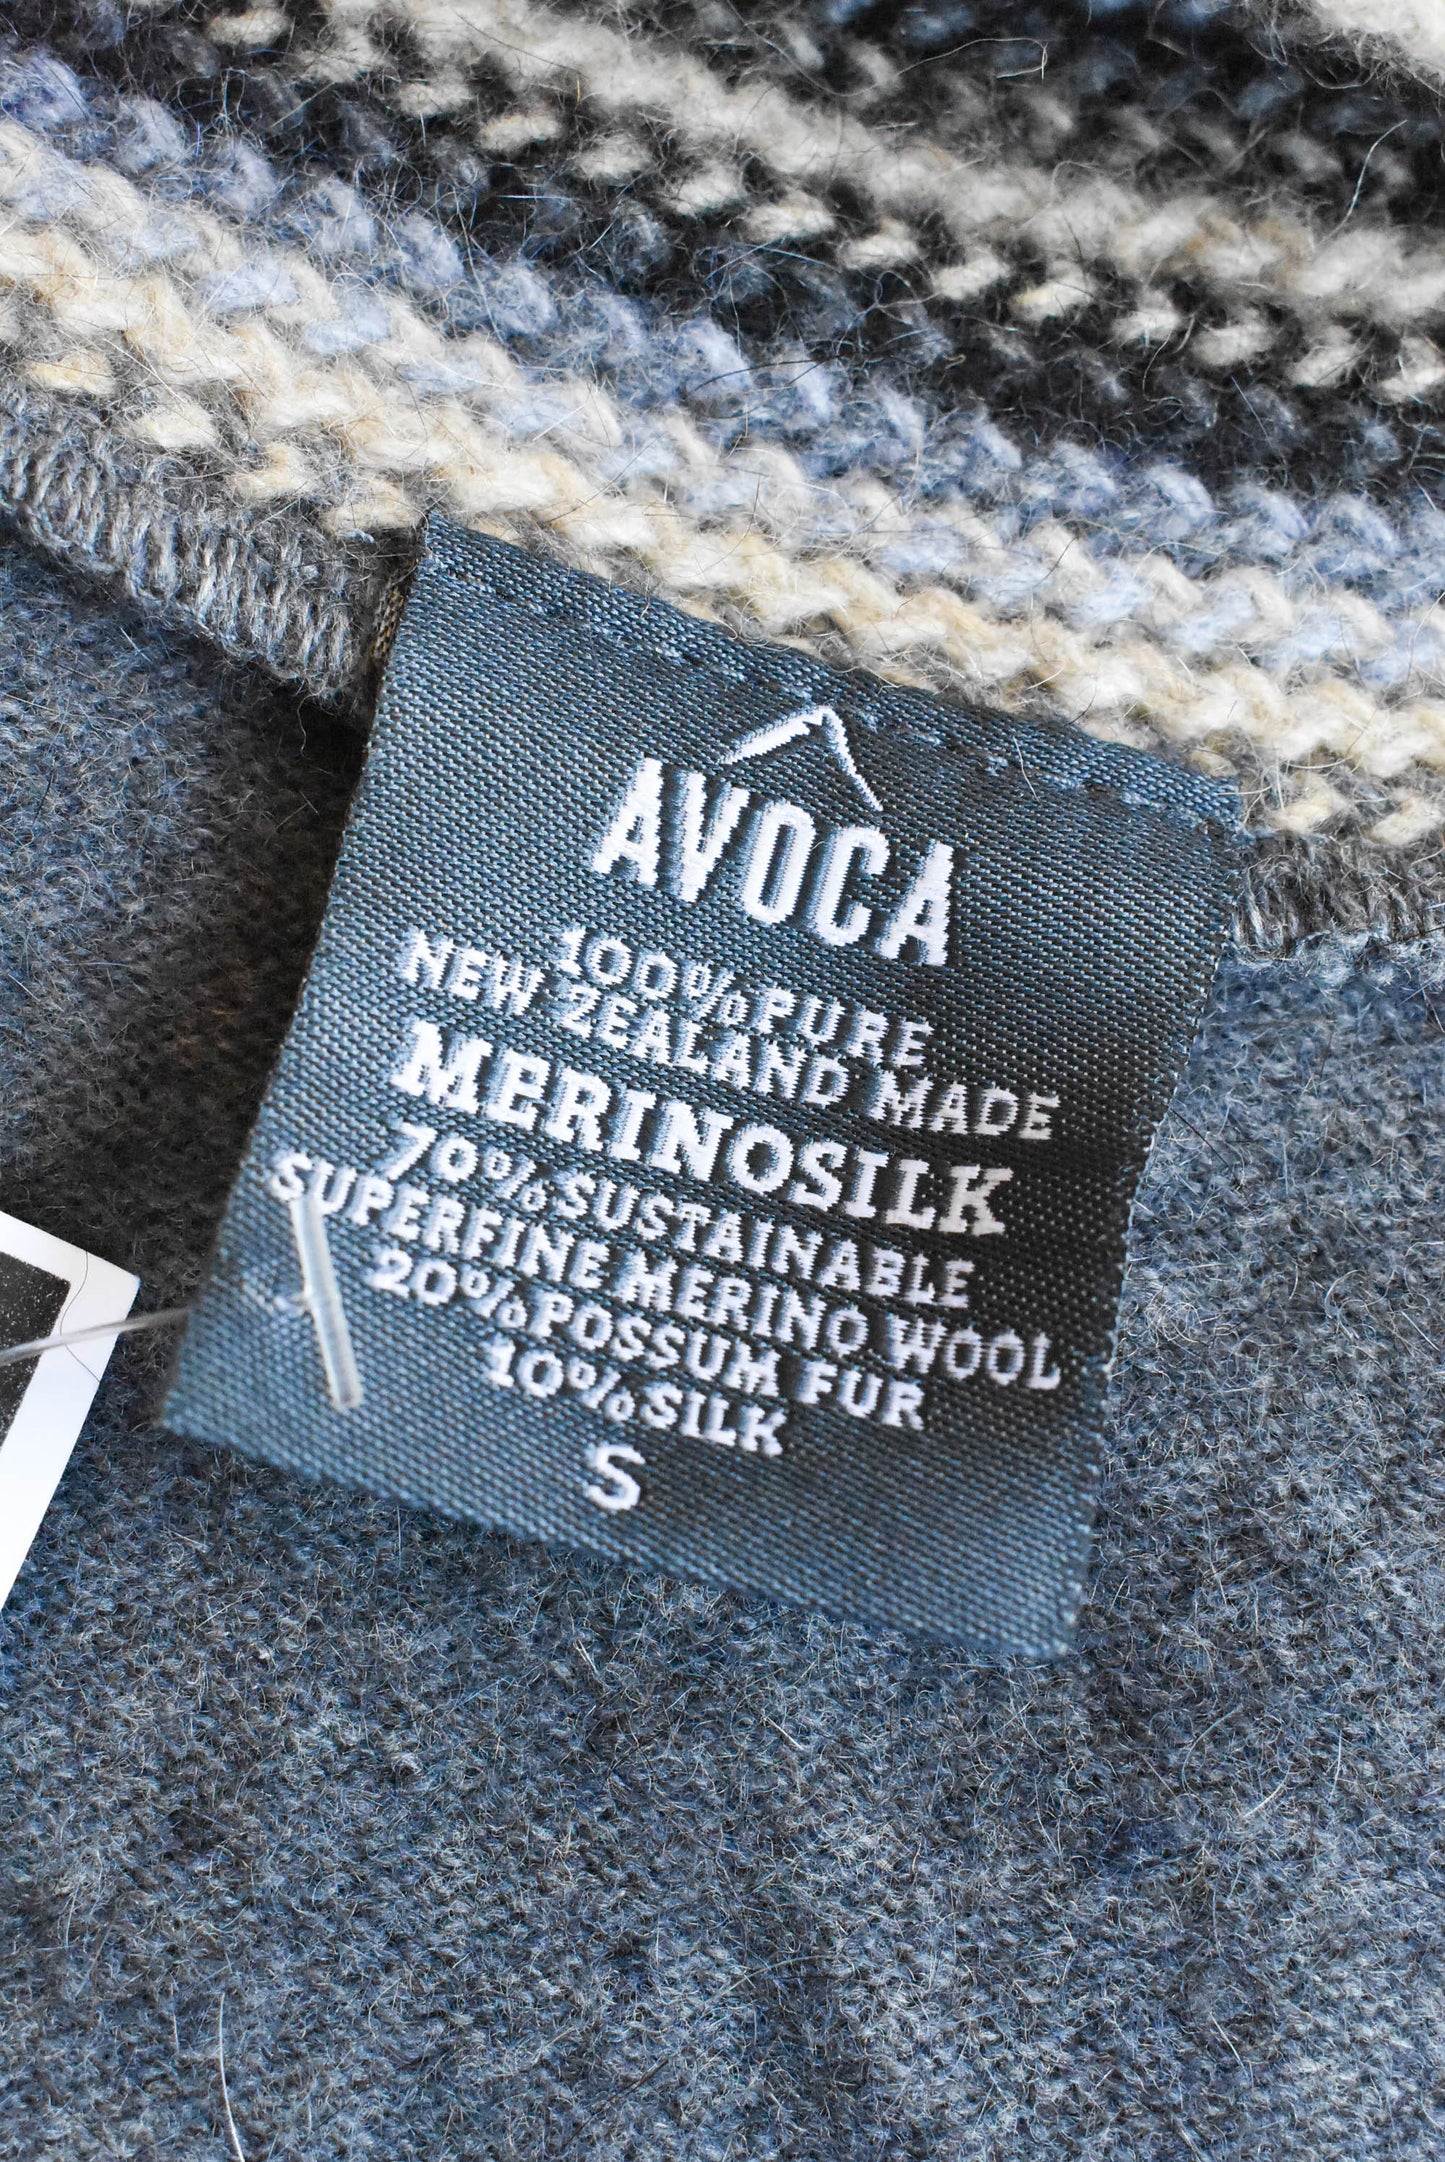 Avoca jacket merino silk grey with woven scarf-like collar S